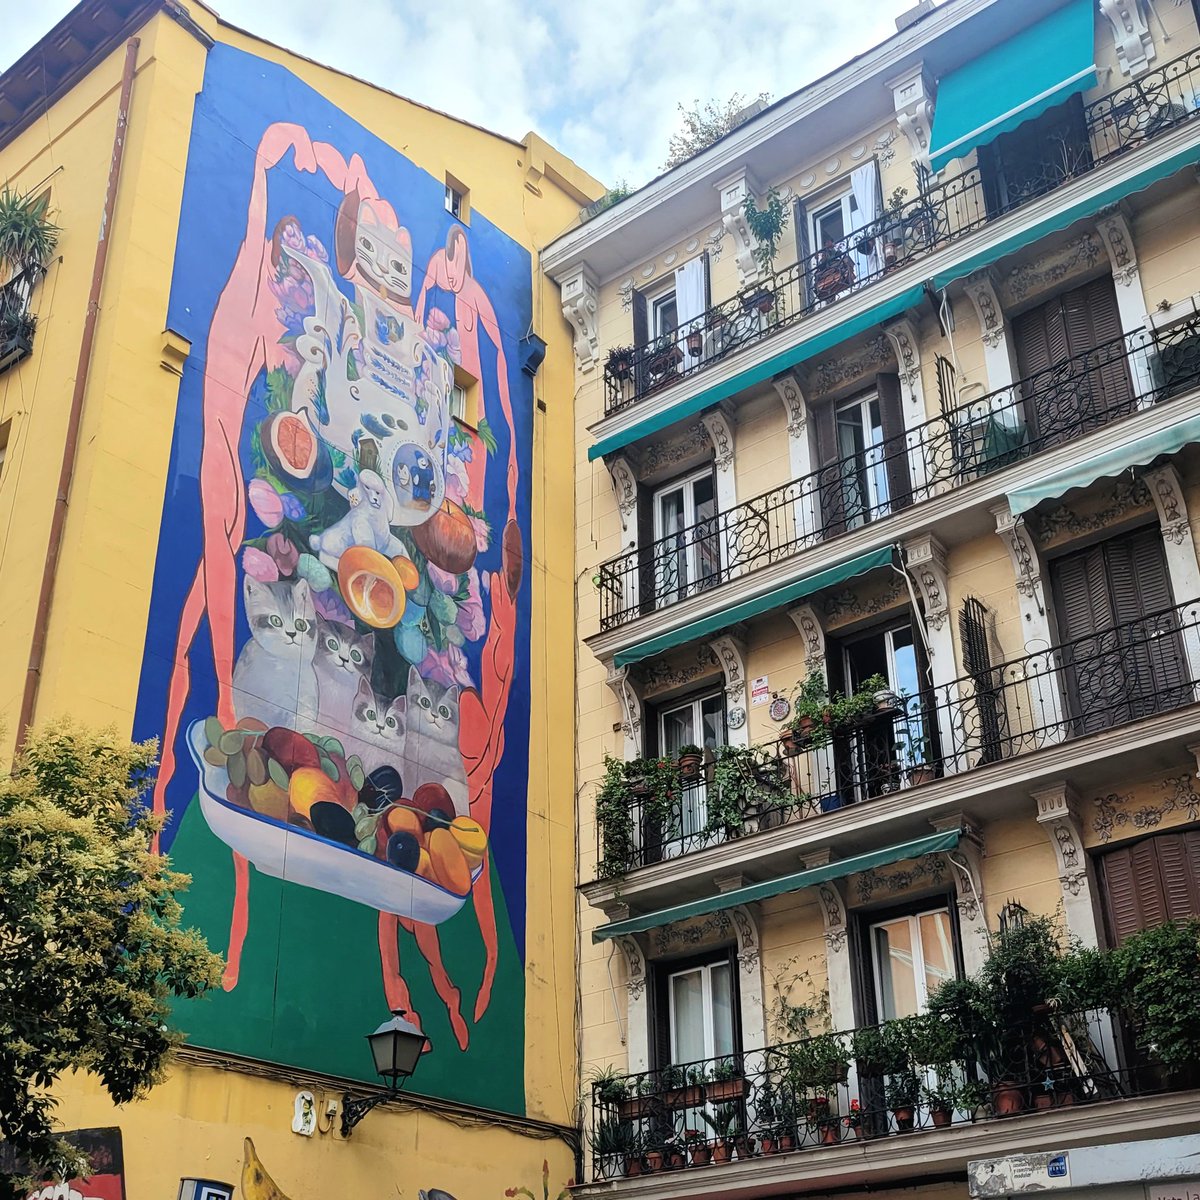 Calle de Embajadores, Madrid
.
#StreetArt #art #artederua #artecallejera #zonaurbana #fachada #urbanarea #friday #FelizViernes #goodmorning #BuenosDias #Bomdia #cats #arte